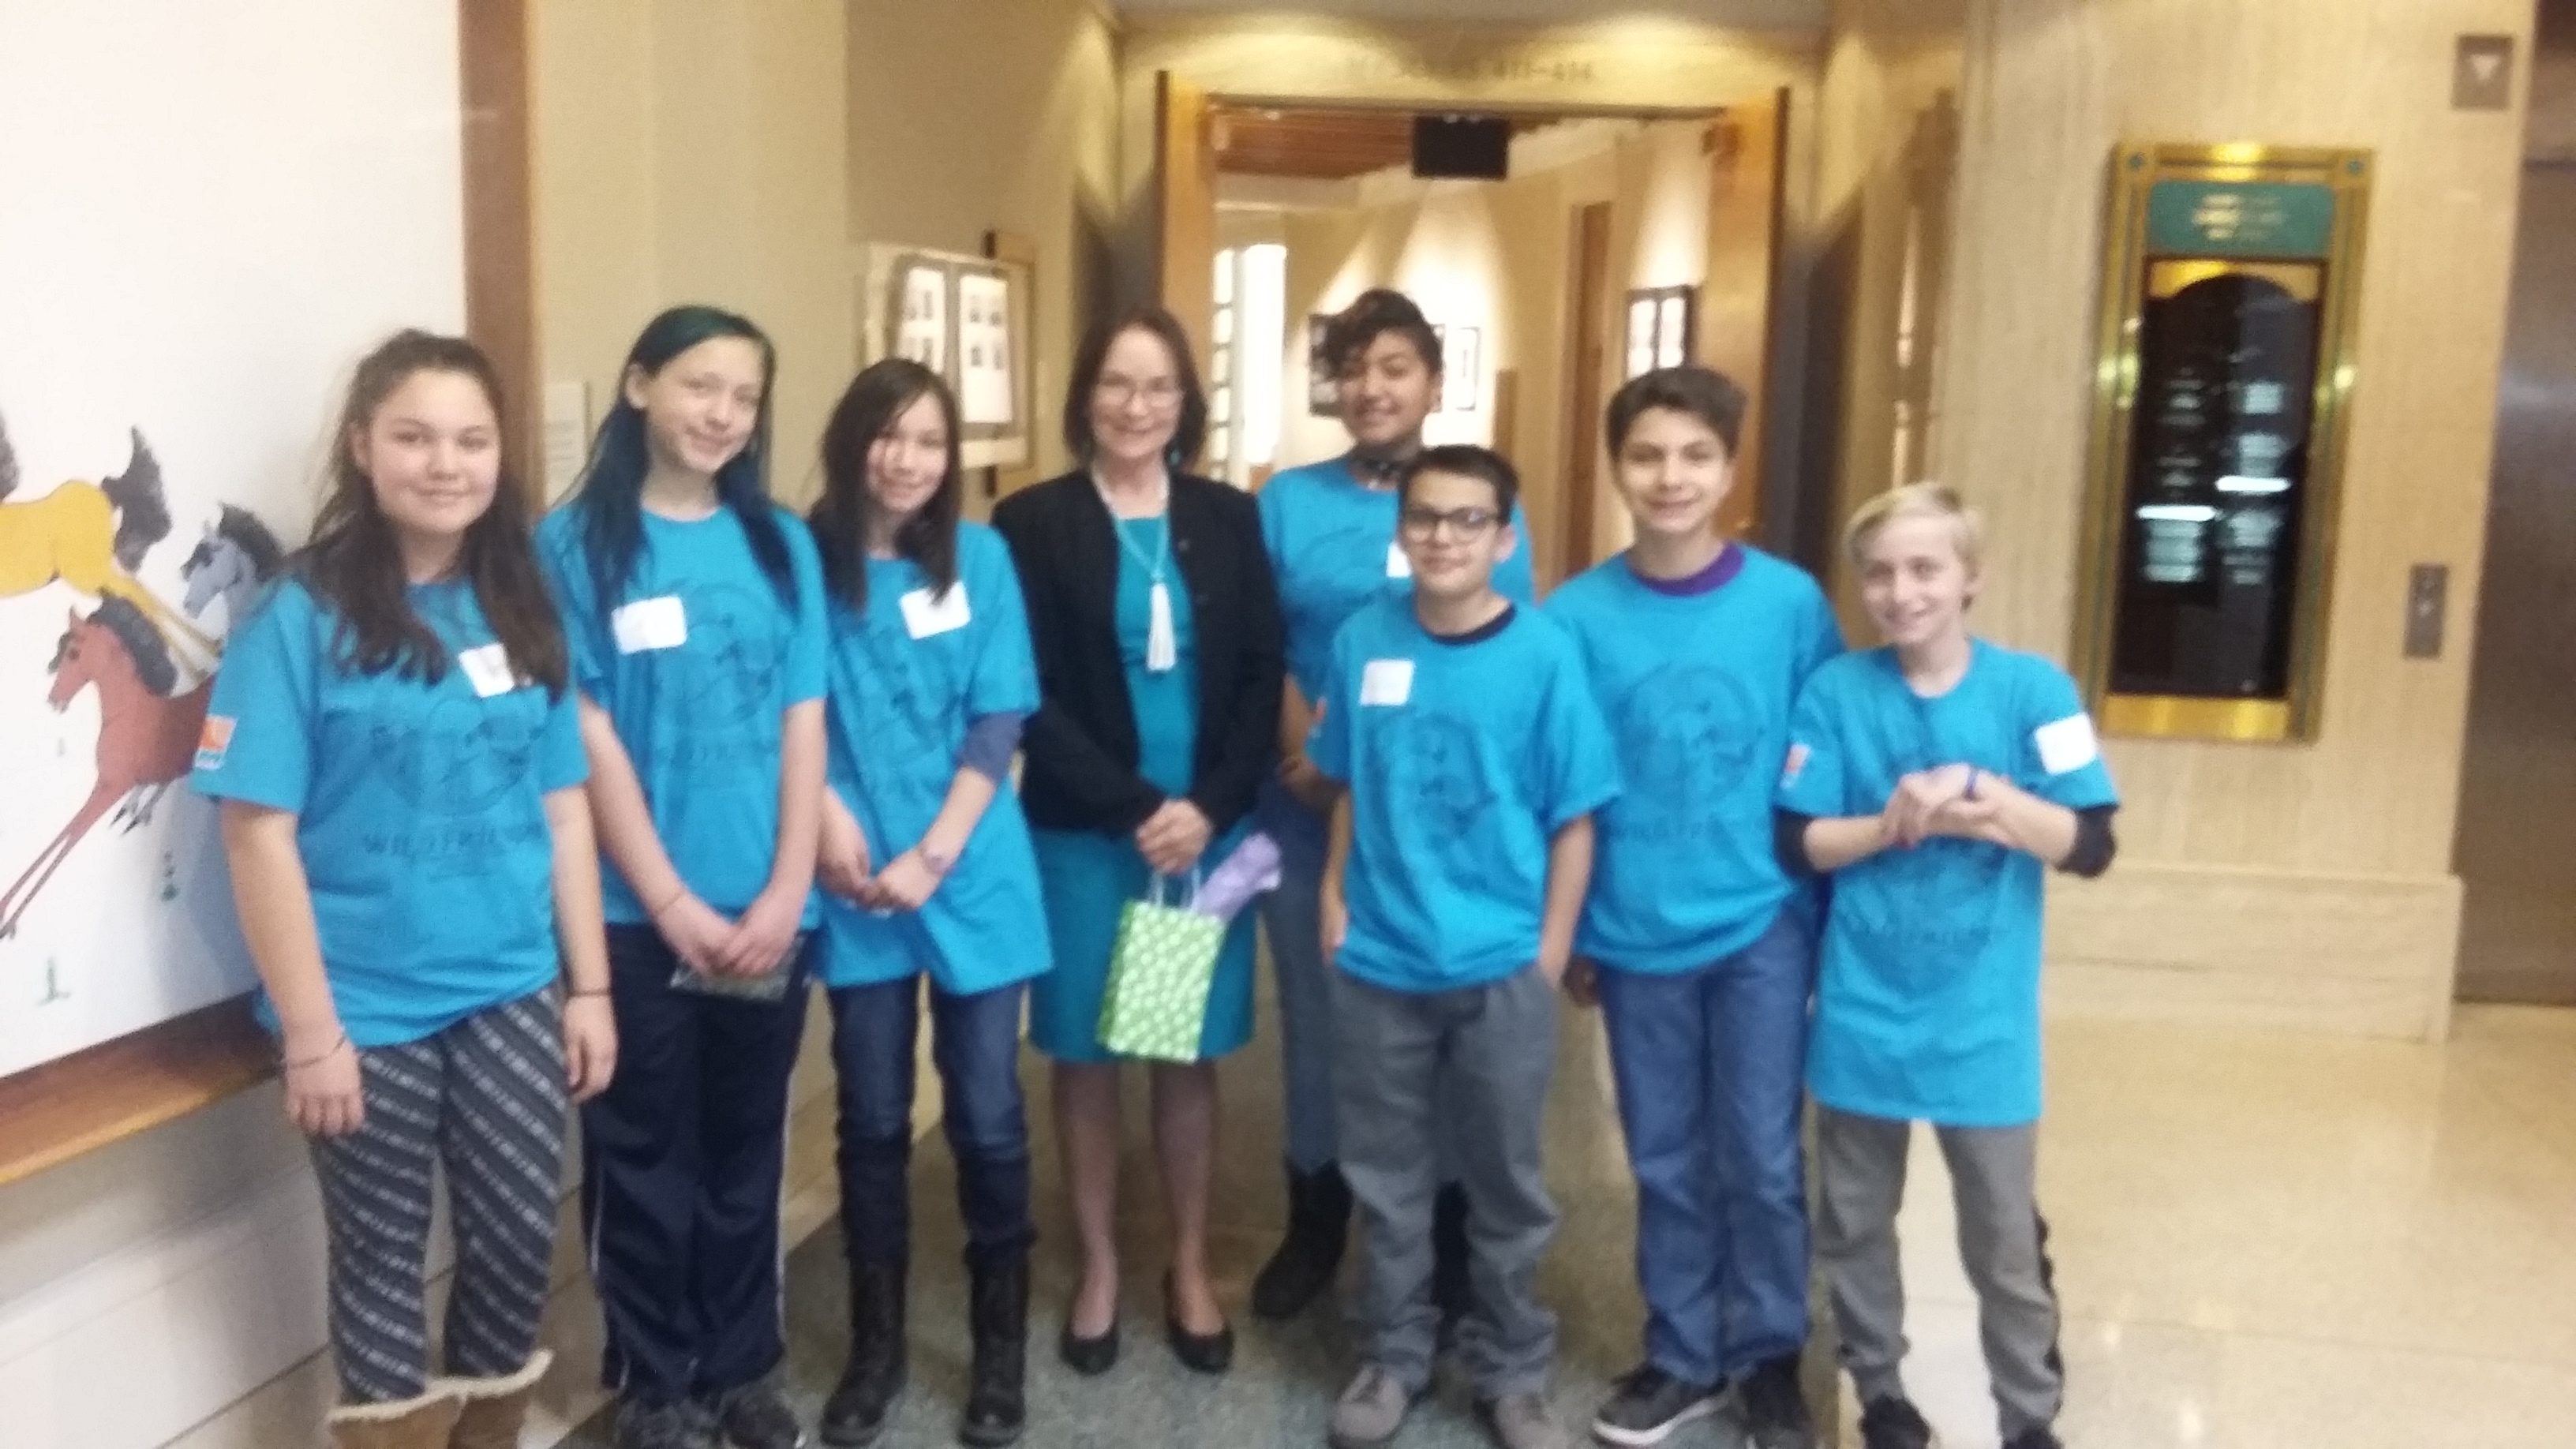 Students from Mt. Mahogany Community School in Albuquerque with Senator Mimi Stewart